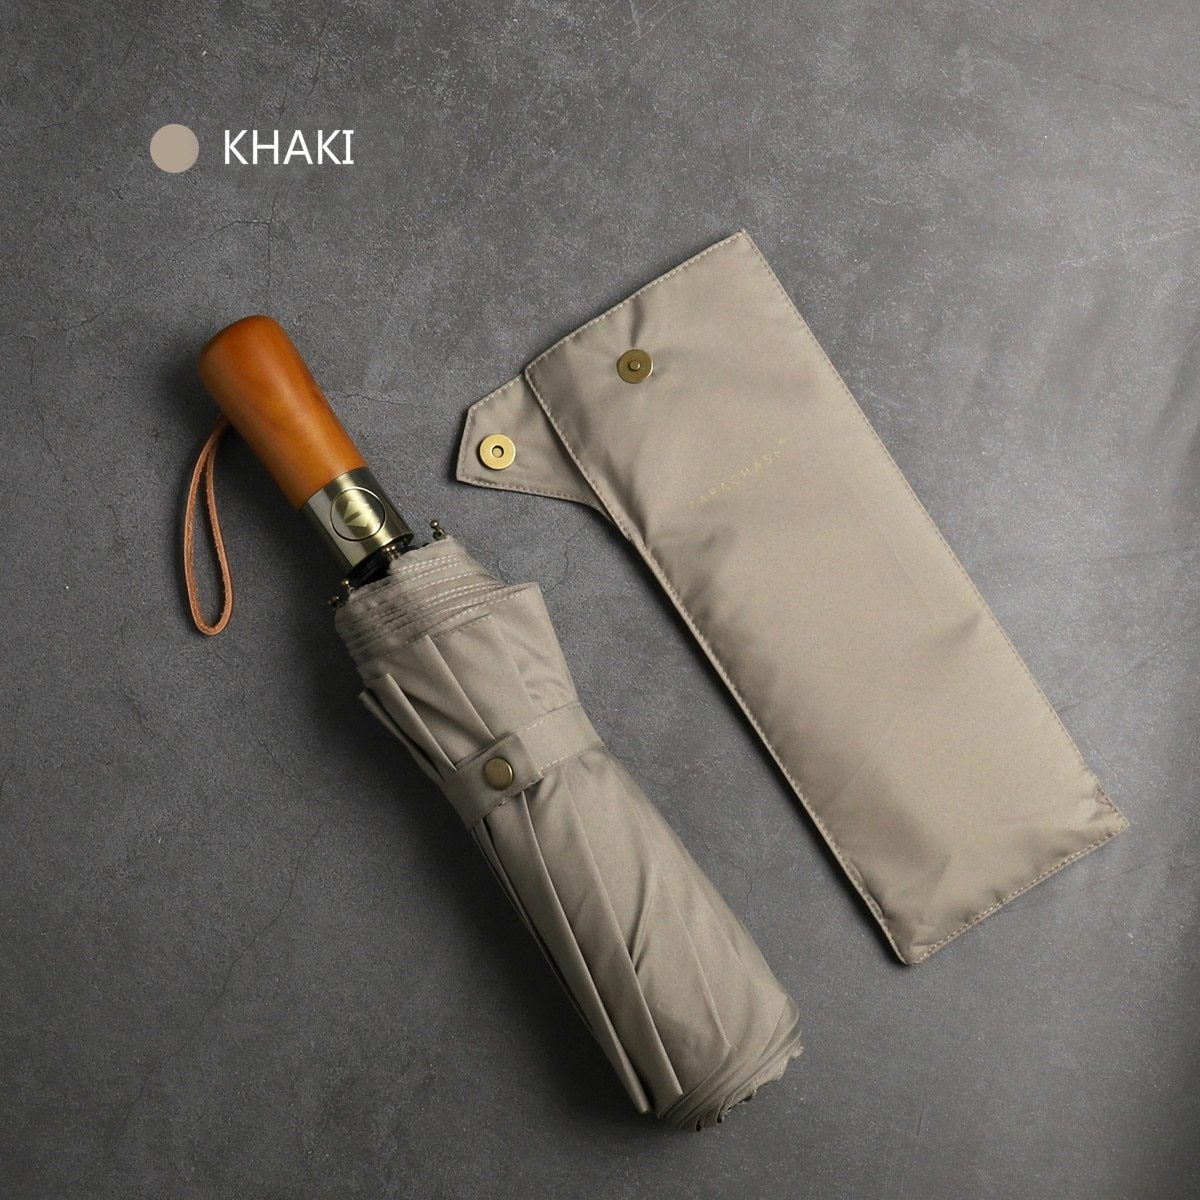 115cm Folding Automatic Umbrella Parachase khaki 